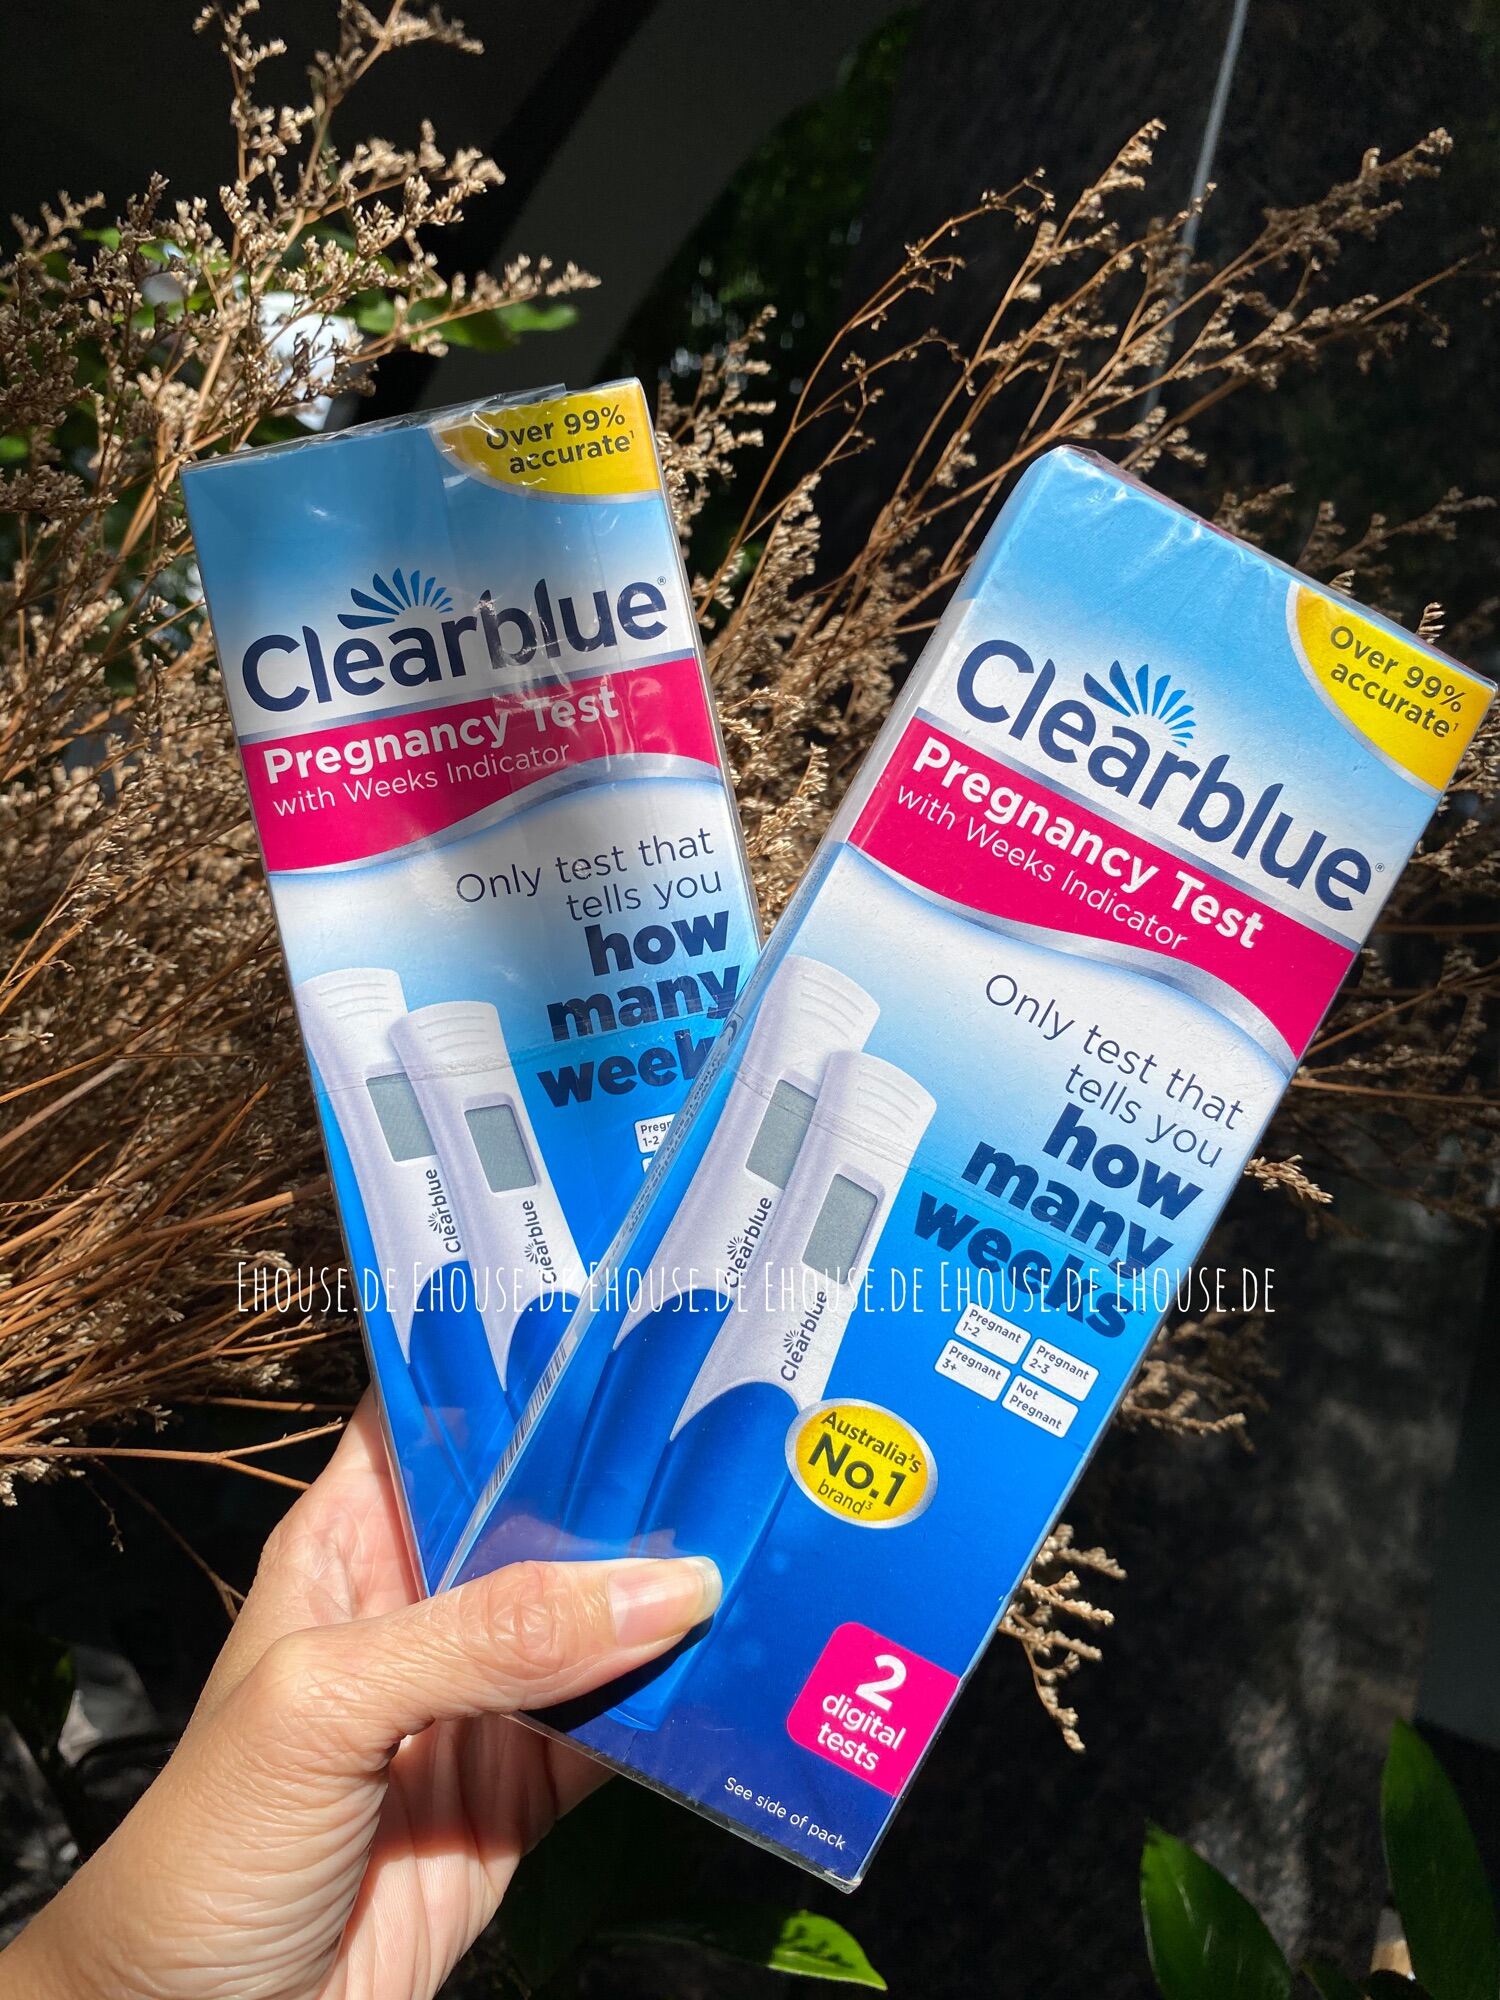 Hộp 2 que thử thai clearblue giúp xác định số tuần thai pregnancy test - ảnh sản phẩm 1